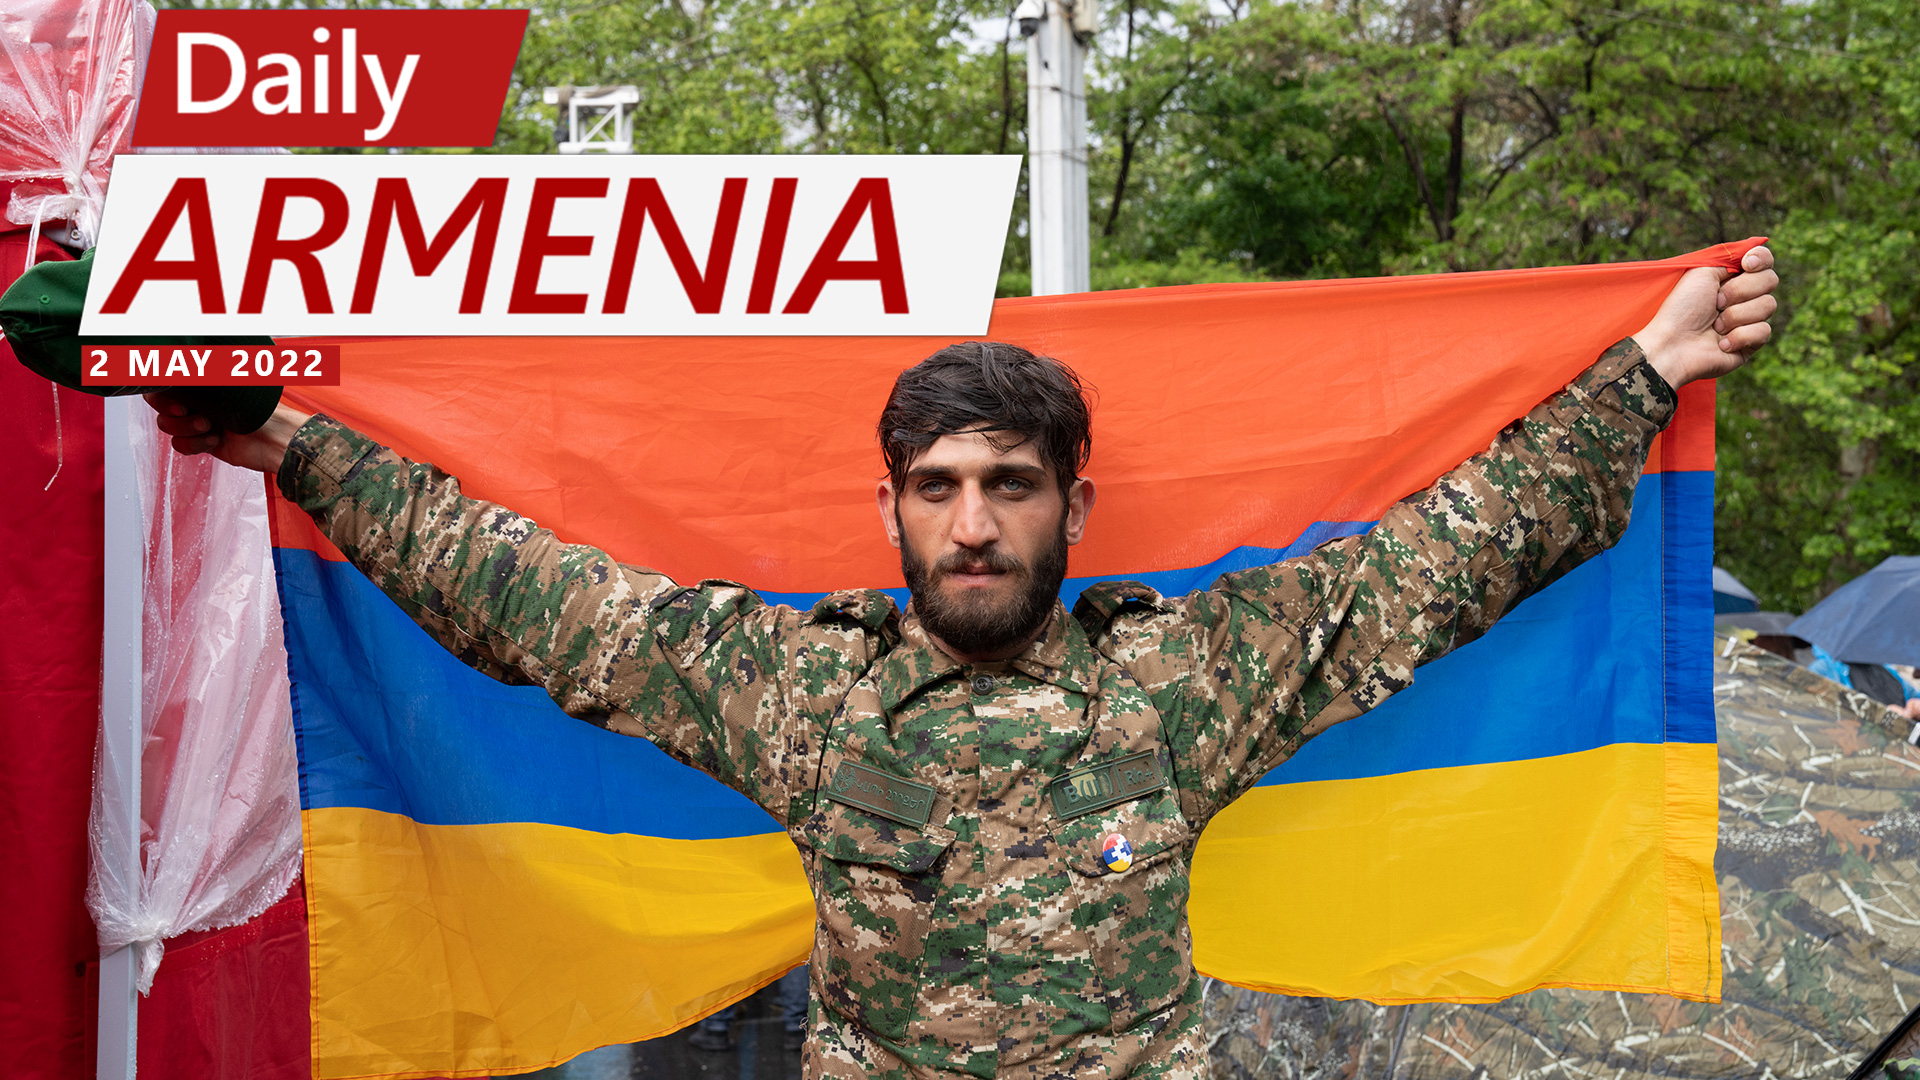 daily news from armenia